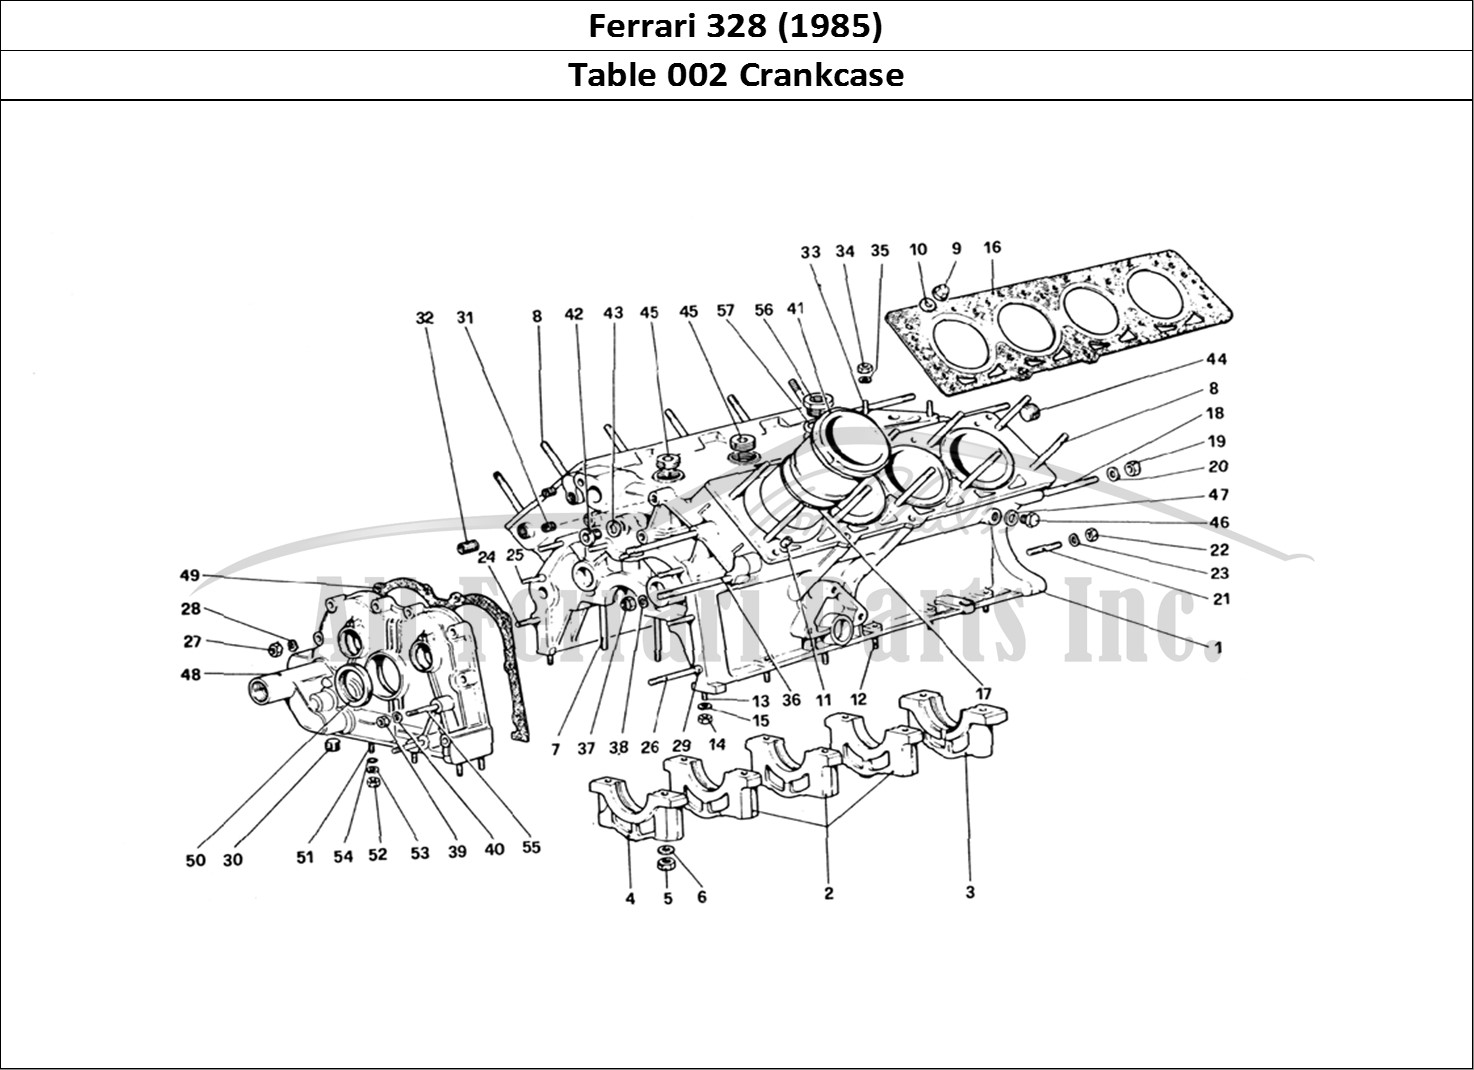 Ferrari Parts Ferrari 328 (1985) Page 002 Crankcase